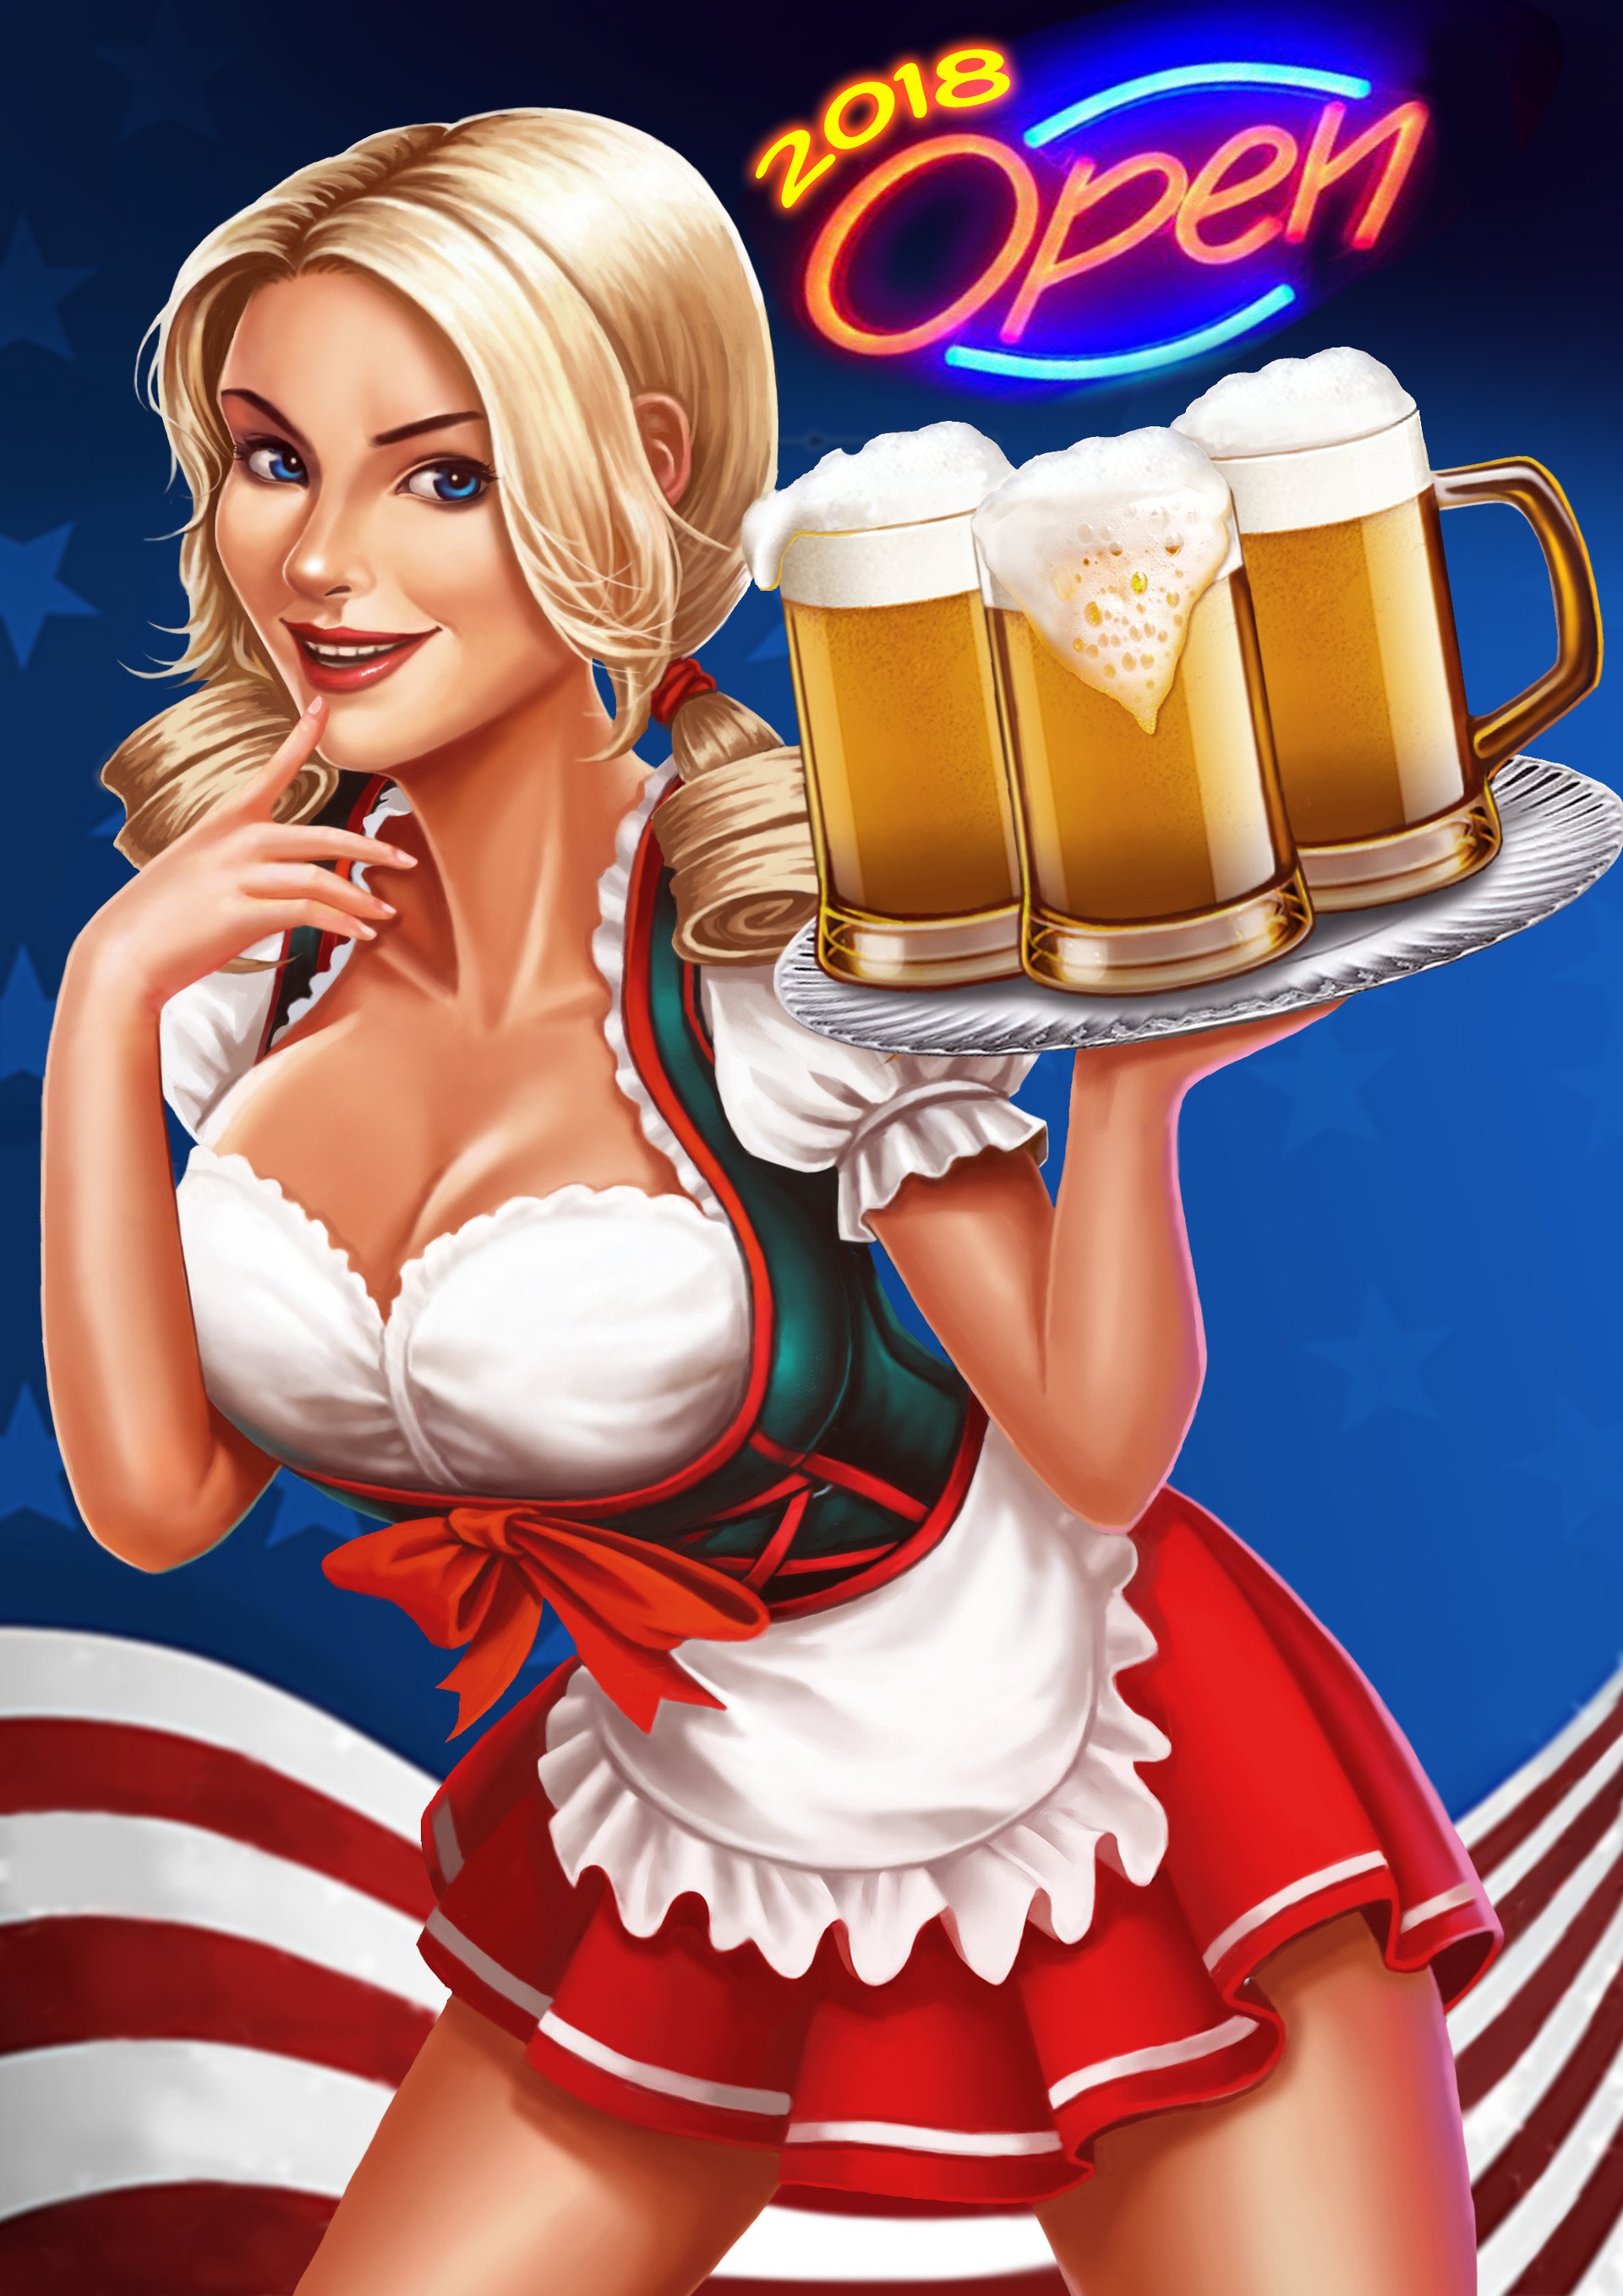 Girl beer poster - 🧡 Персонажи для рекламы и упаковки. on Behance.